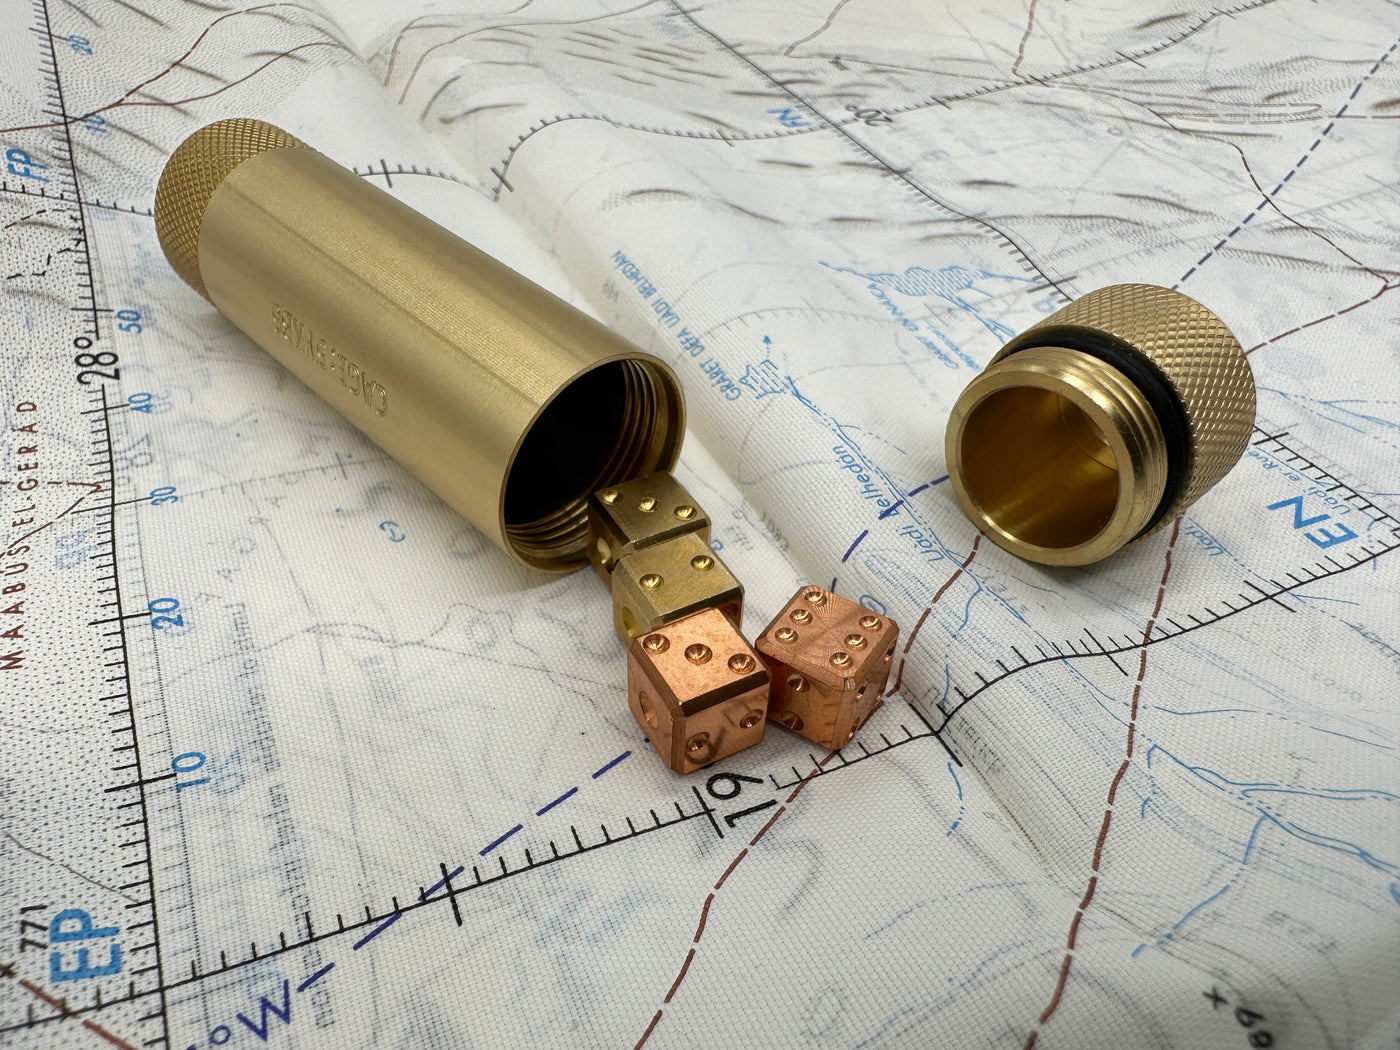 Brass Match / Compass Capsule - Gen 2 Countycomm